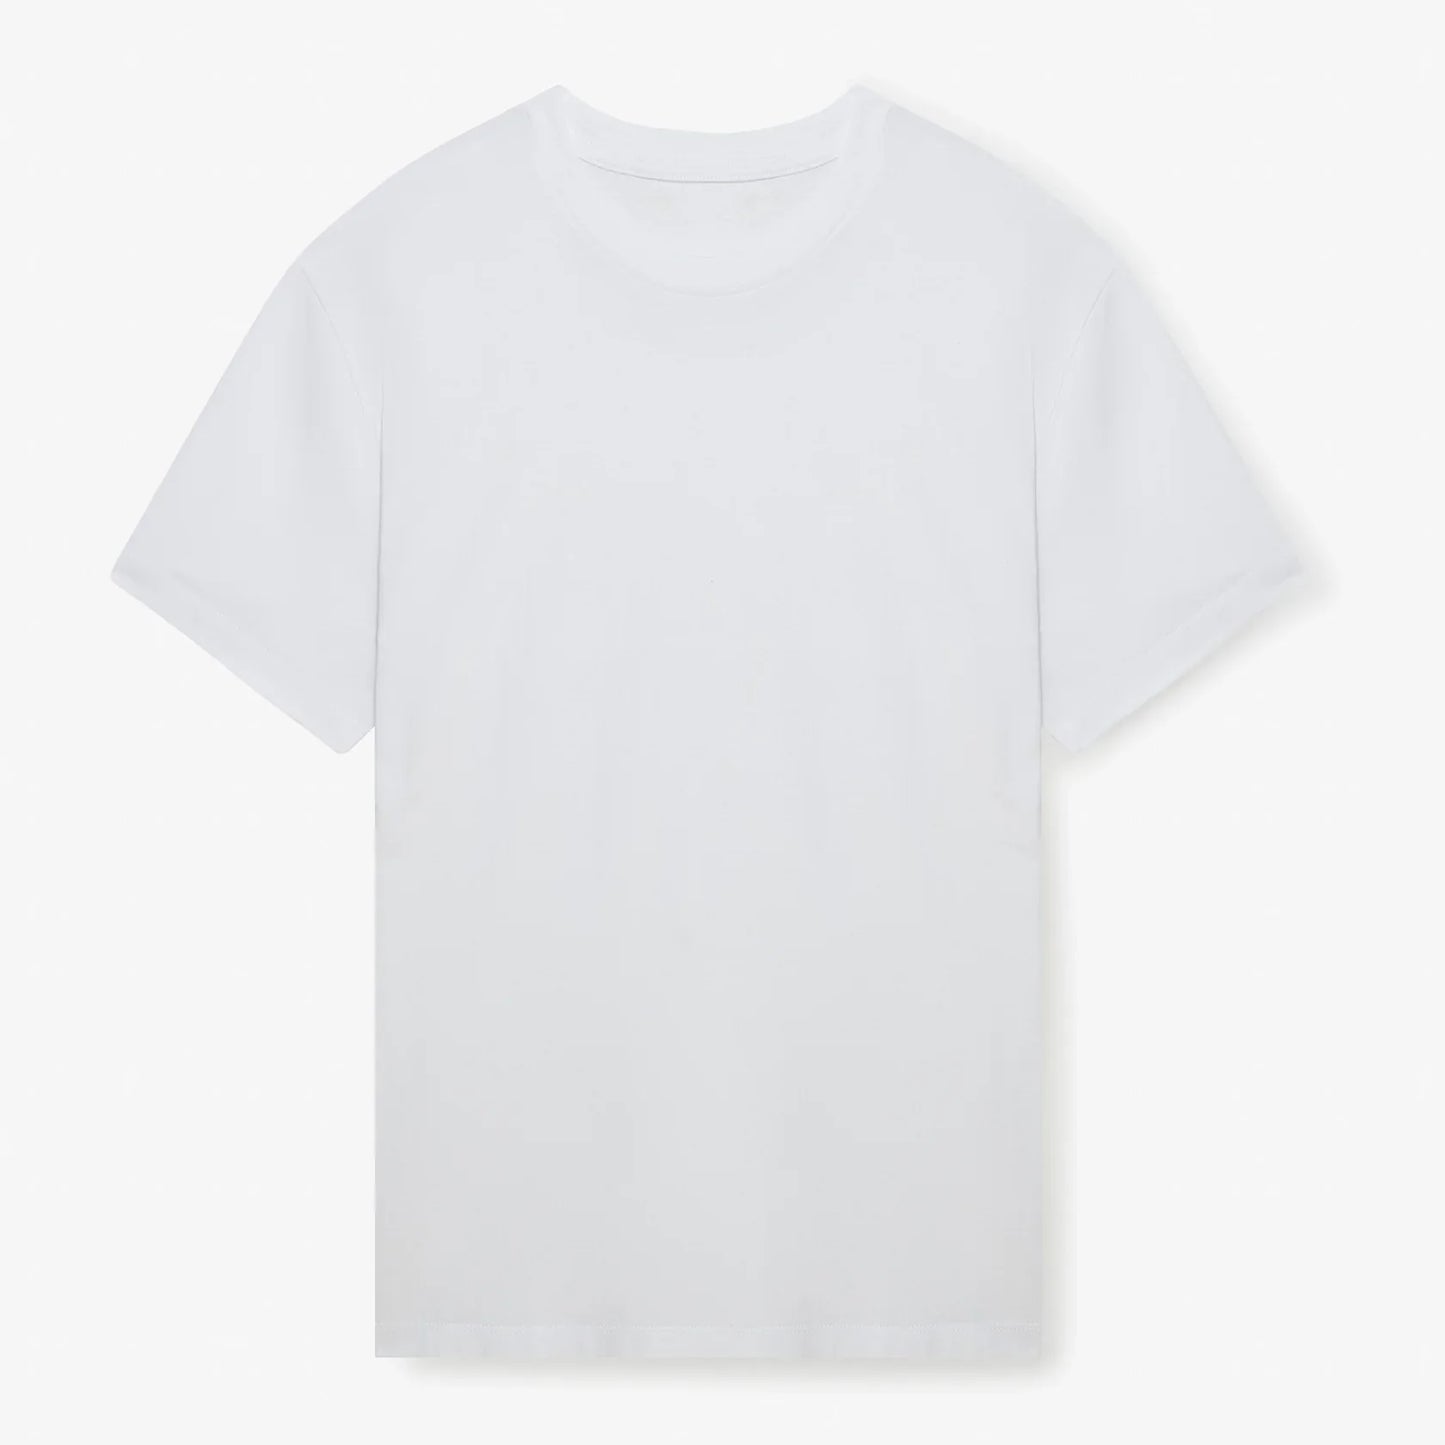 Milo & Dexter Classic Cotton T-Shirt in White Fall 23/24